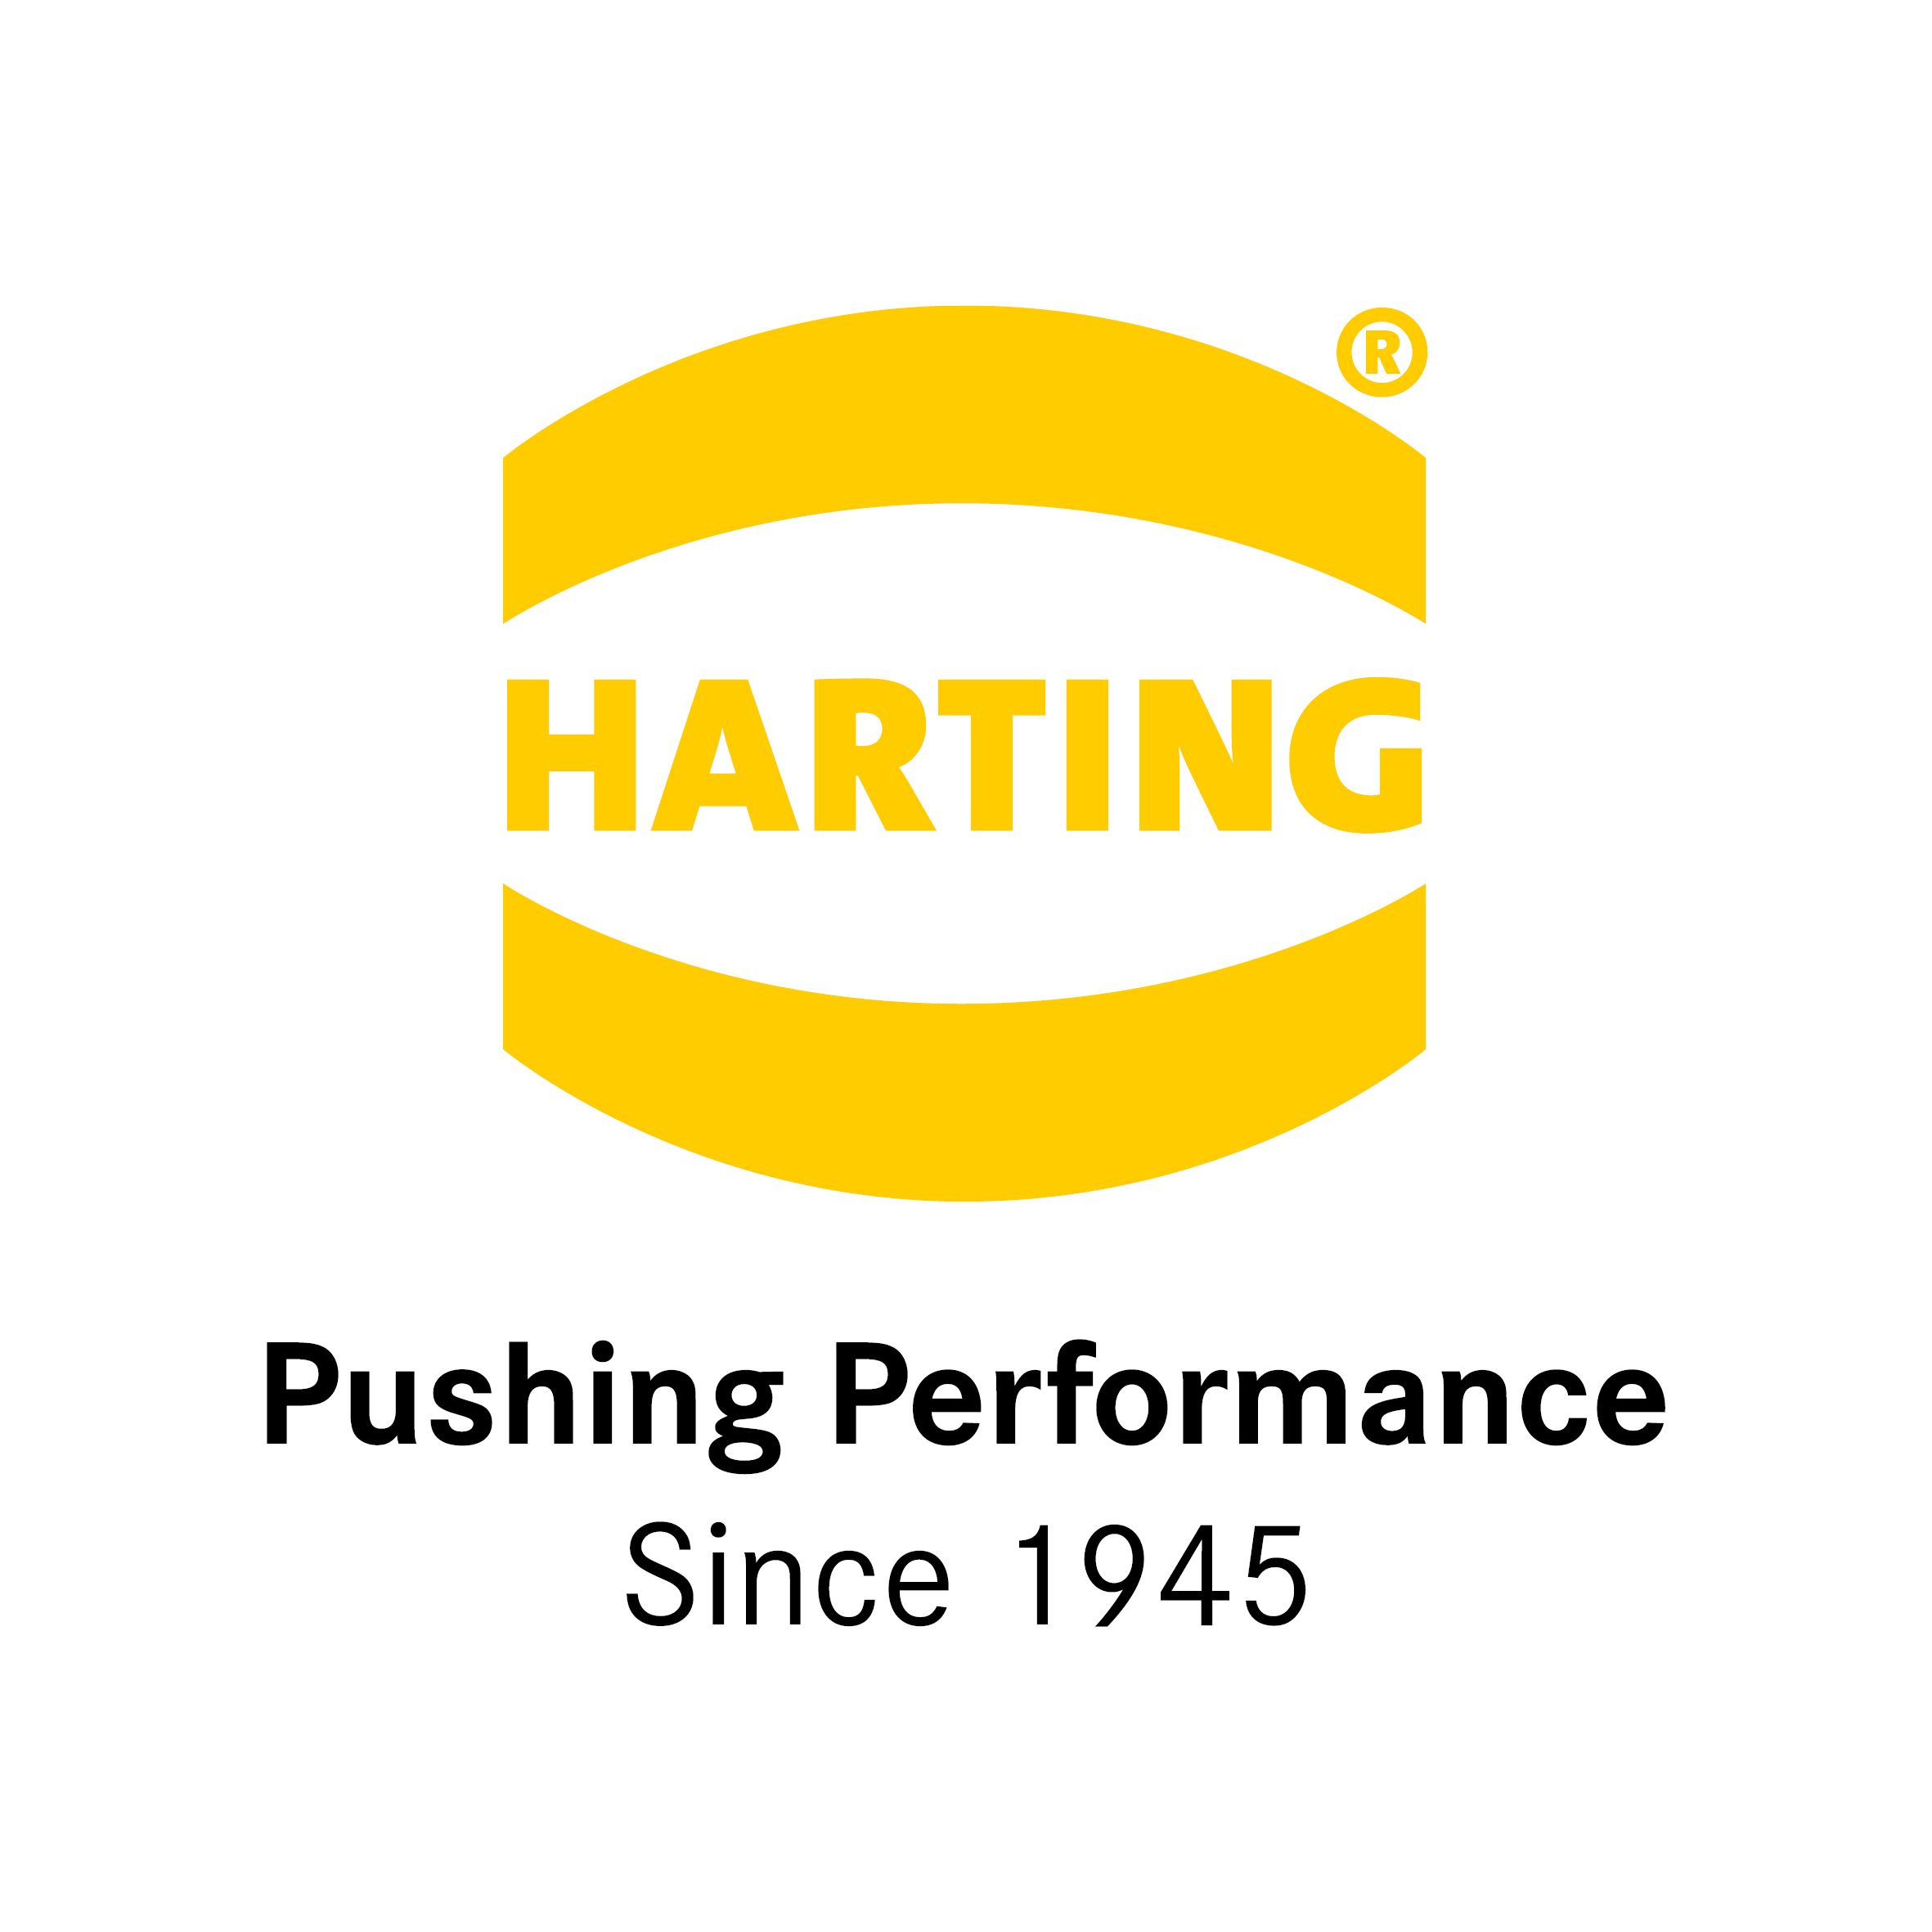 HARTING Ltd